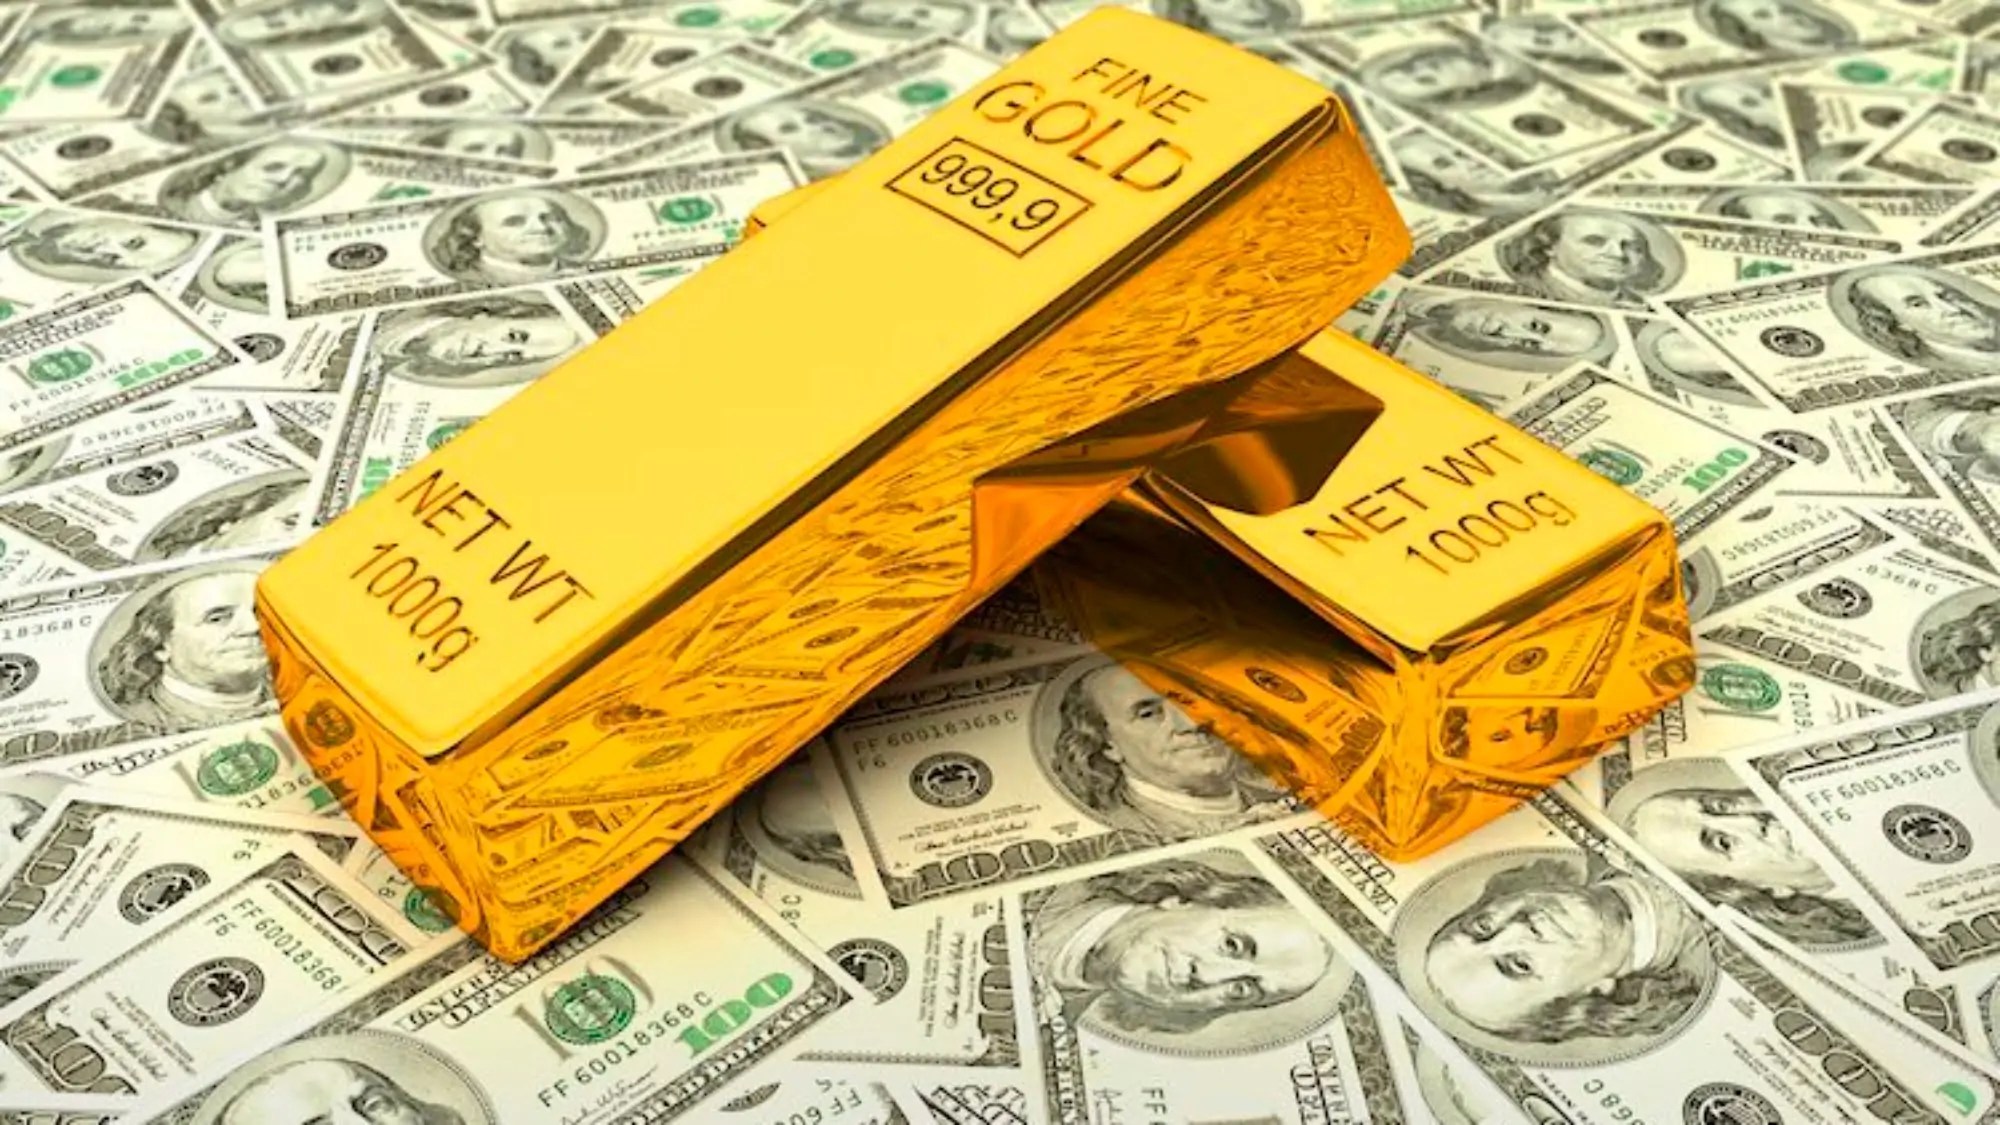 gold-bars-on-dollars-19549282_Large-YIKMQM-2000x1125-1.jpeg